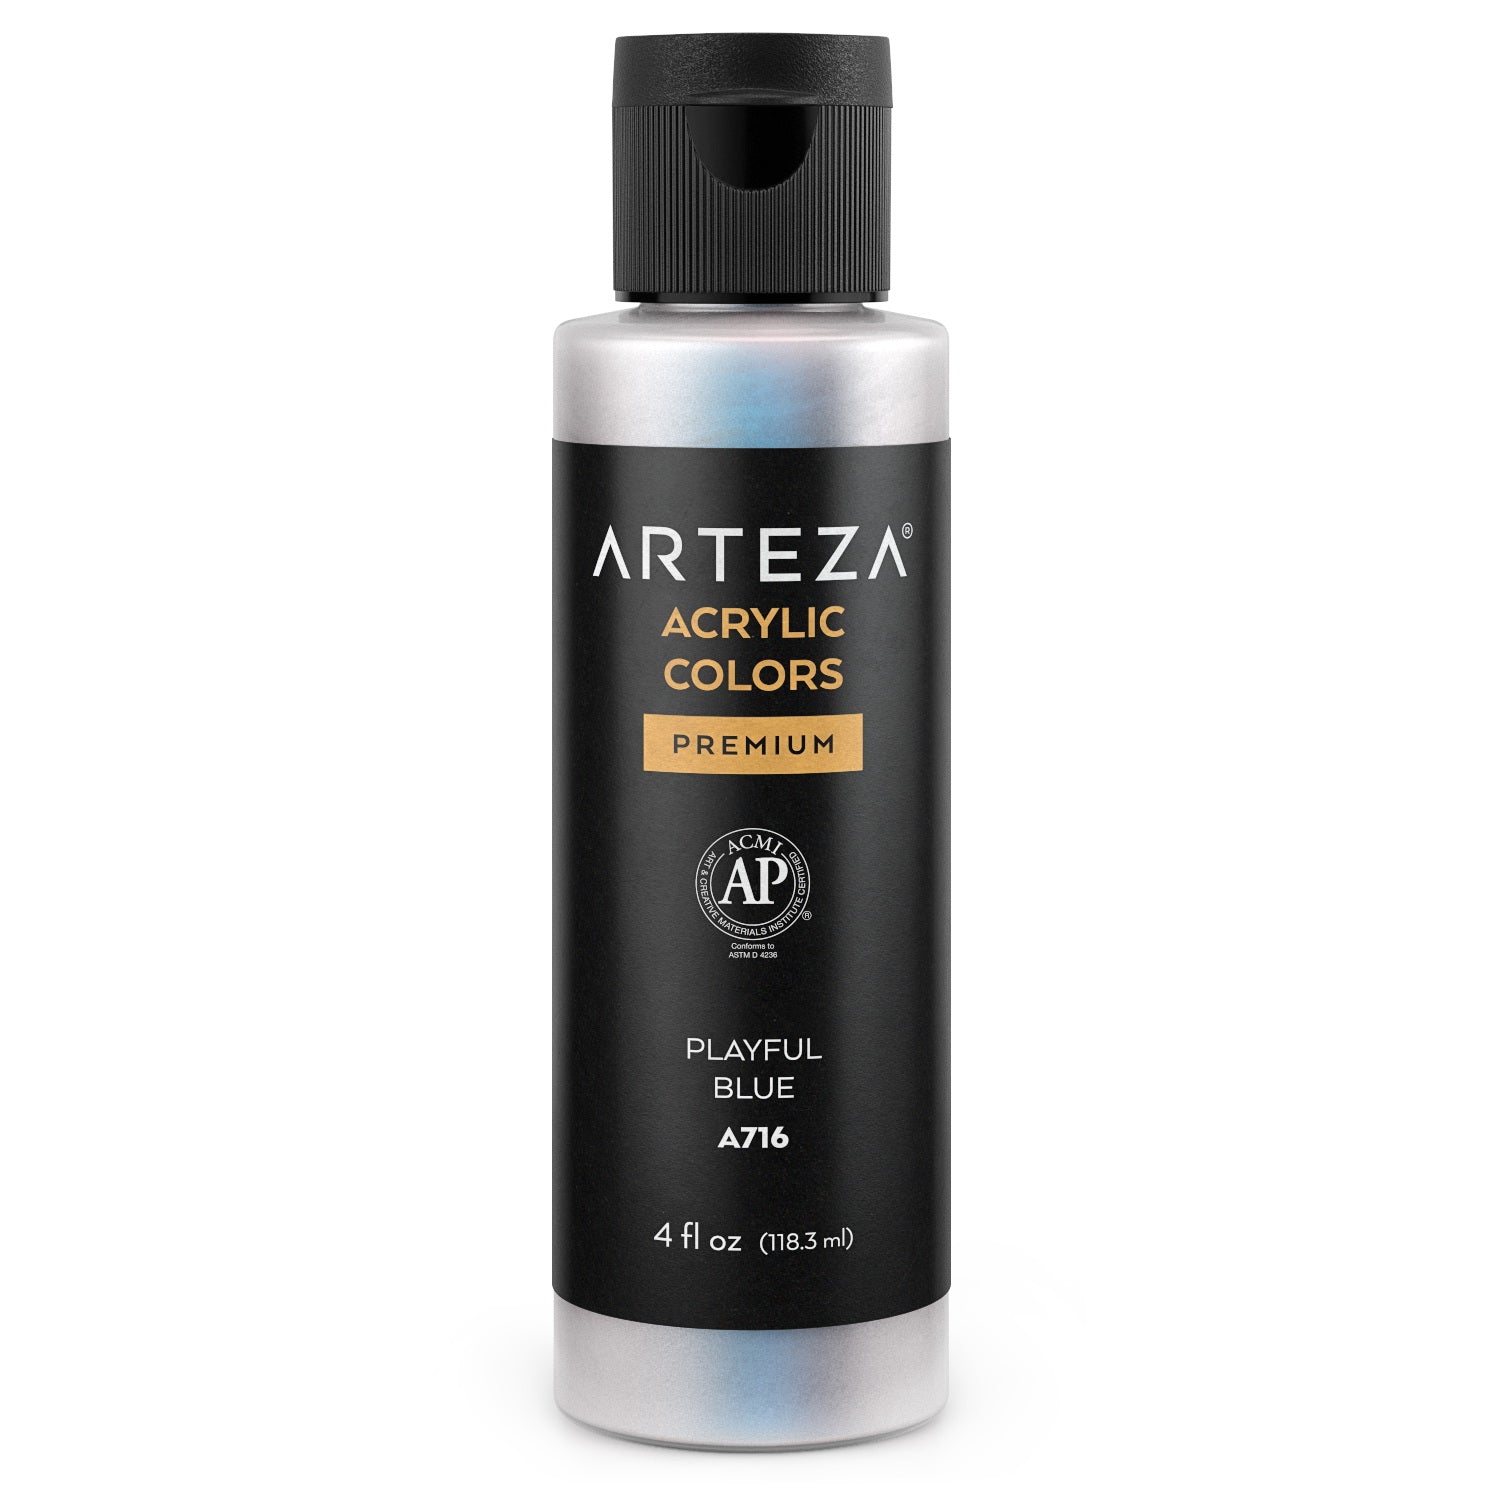 ARTEZA Multi-colored Acrylic Metallic Paint (4-oz) at